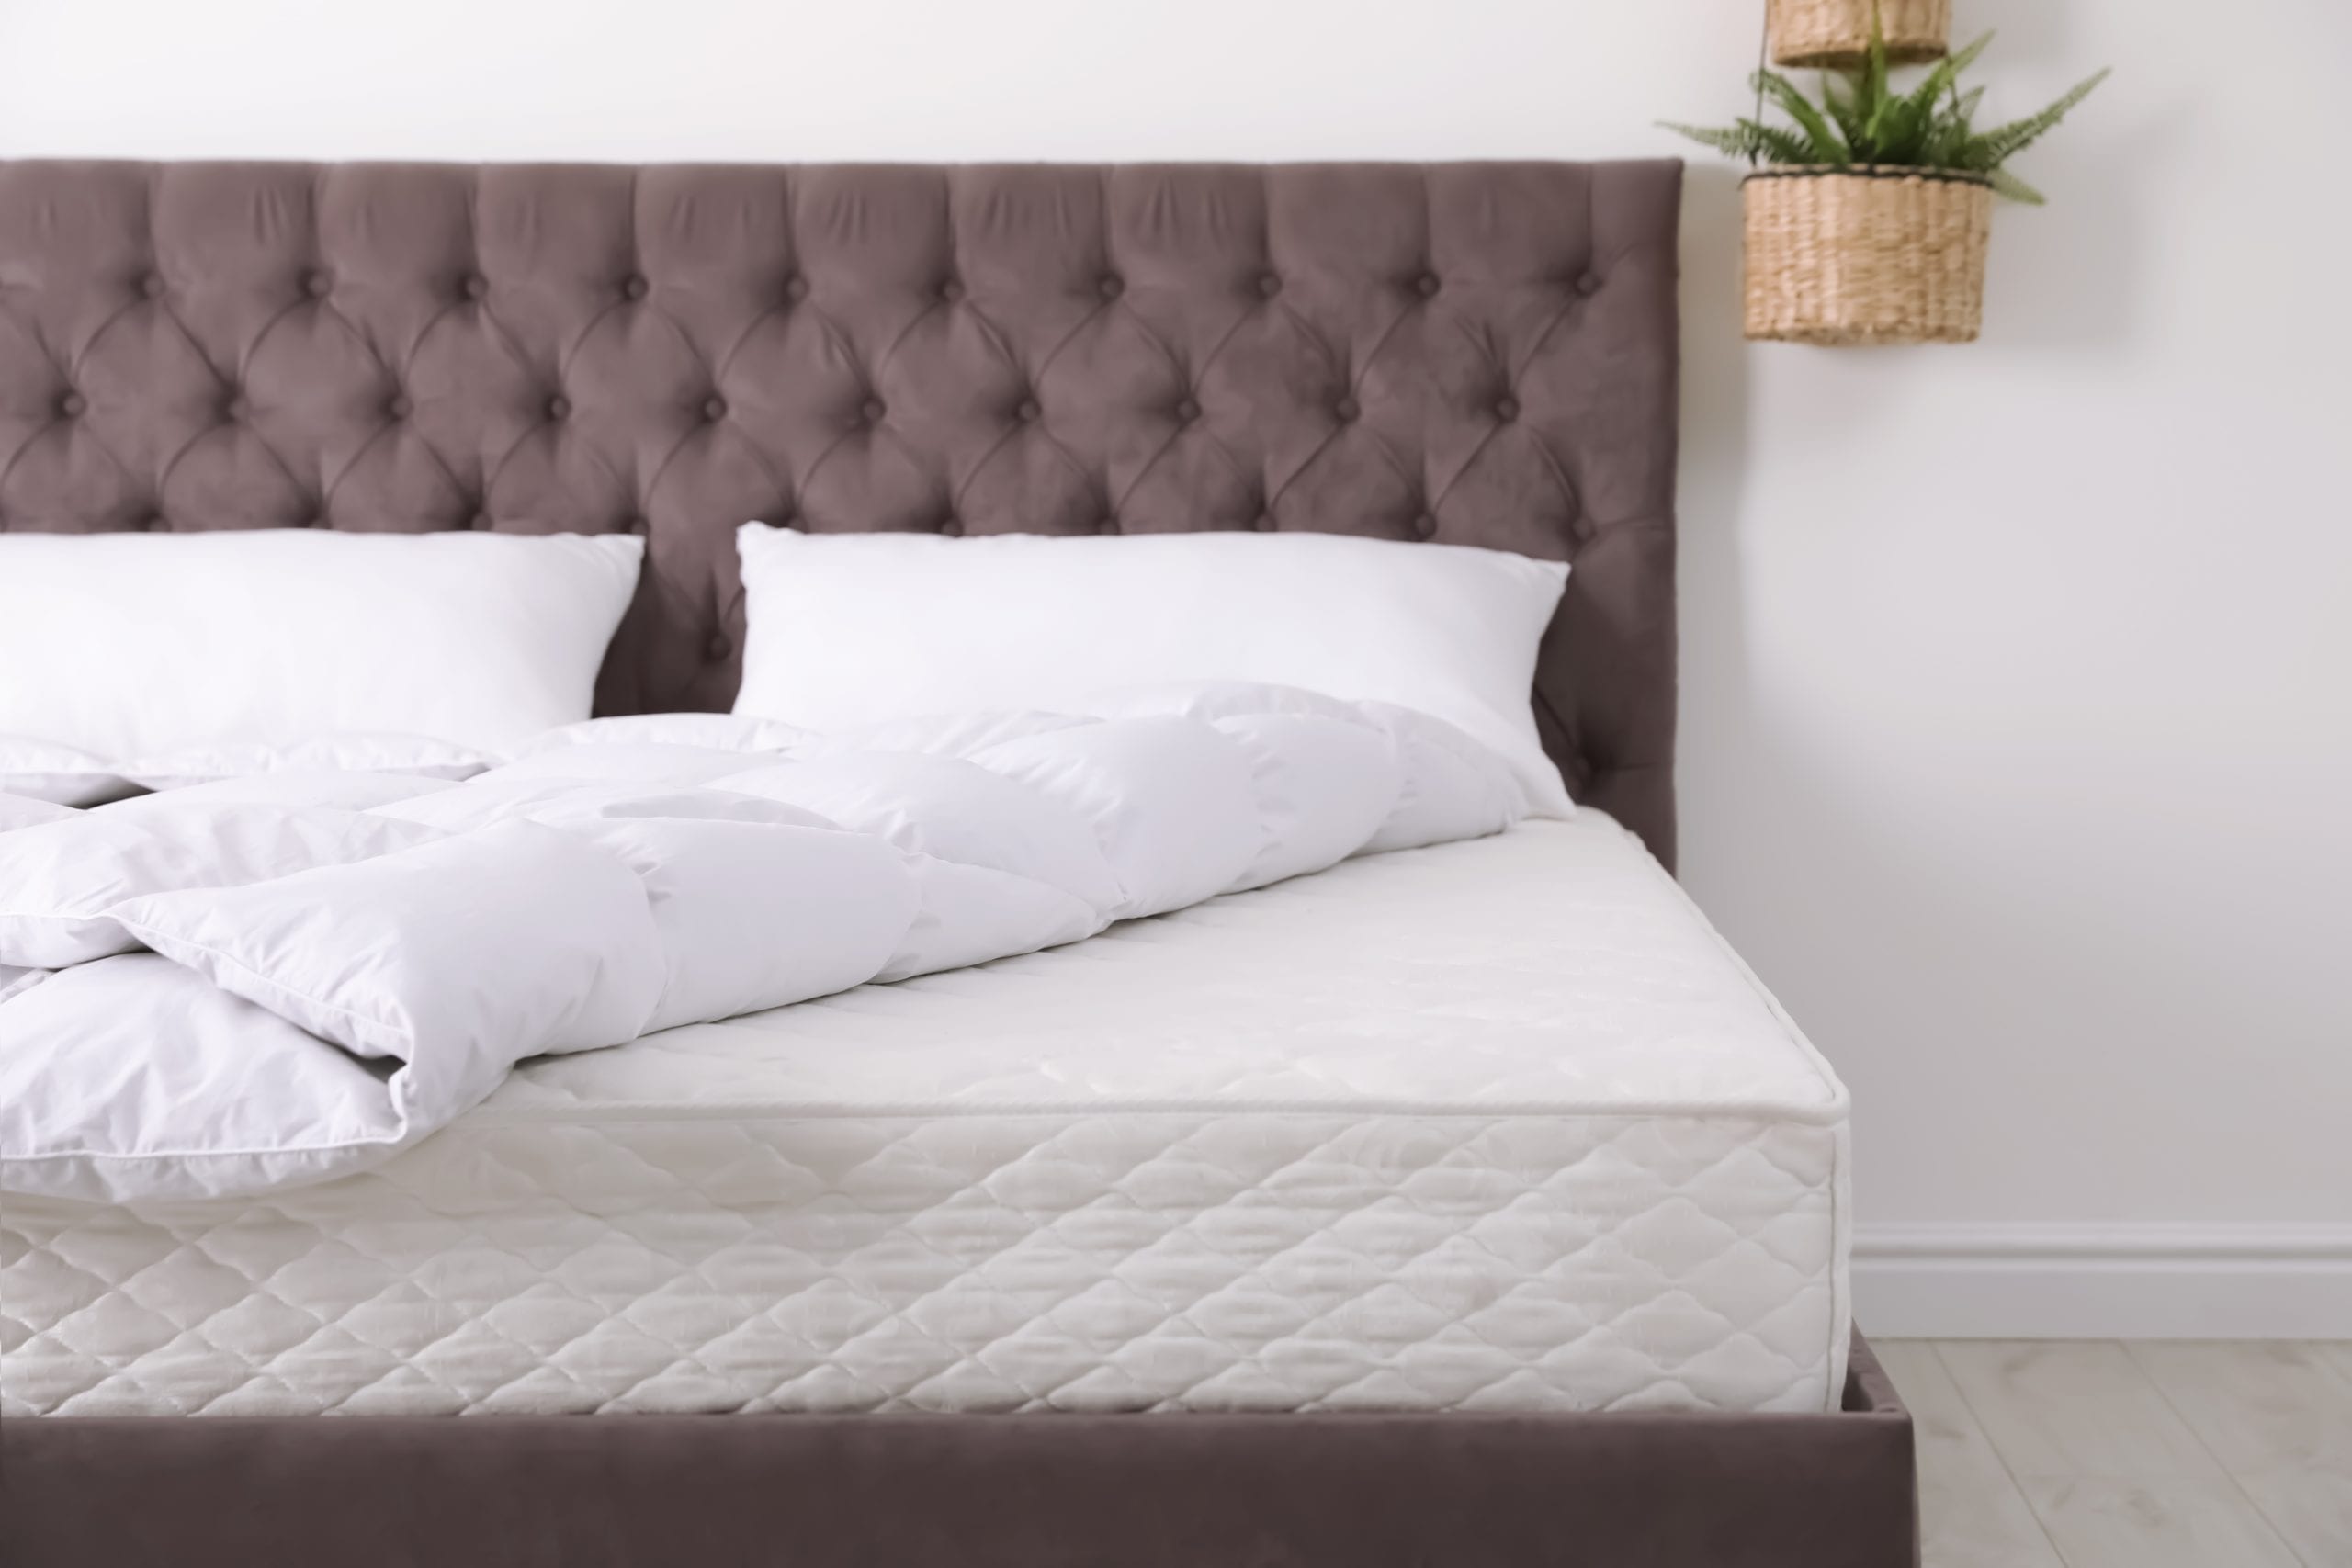 Bedding and Sleep Comfort Adjustable Beds - YouTube Sleep Number p7 bed - M...